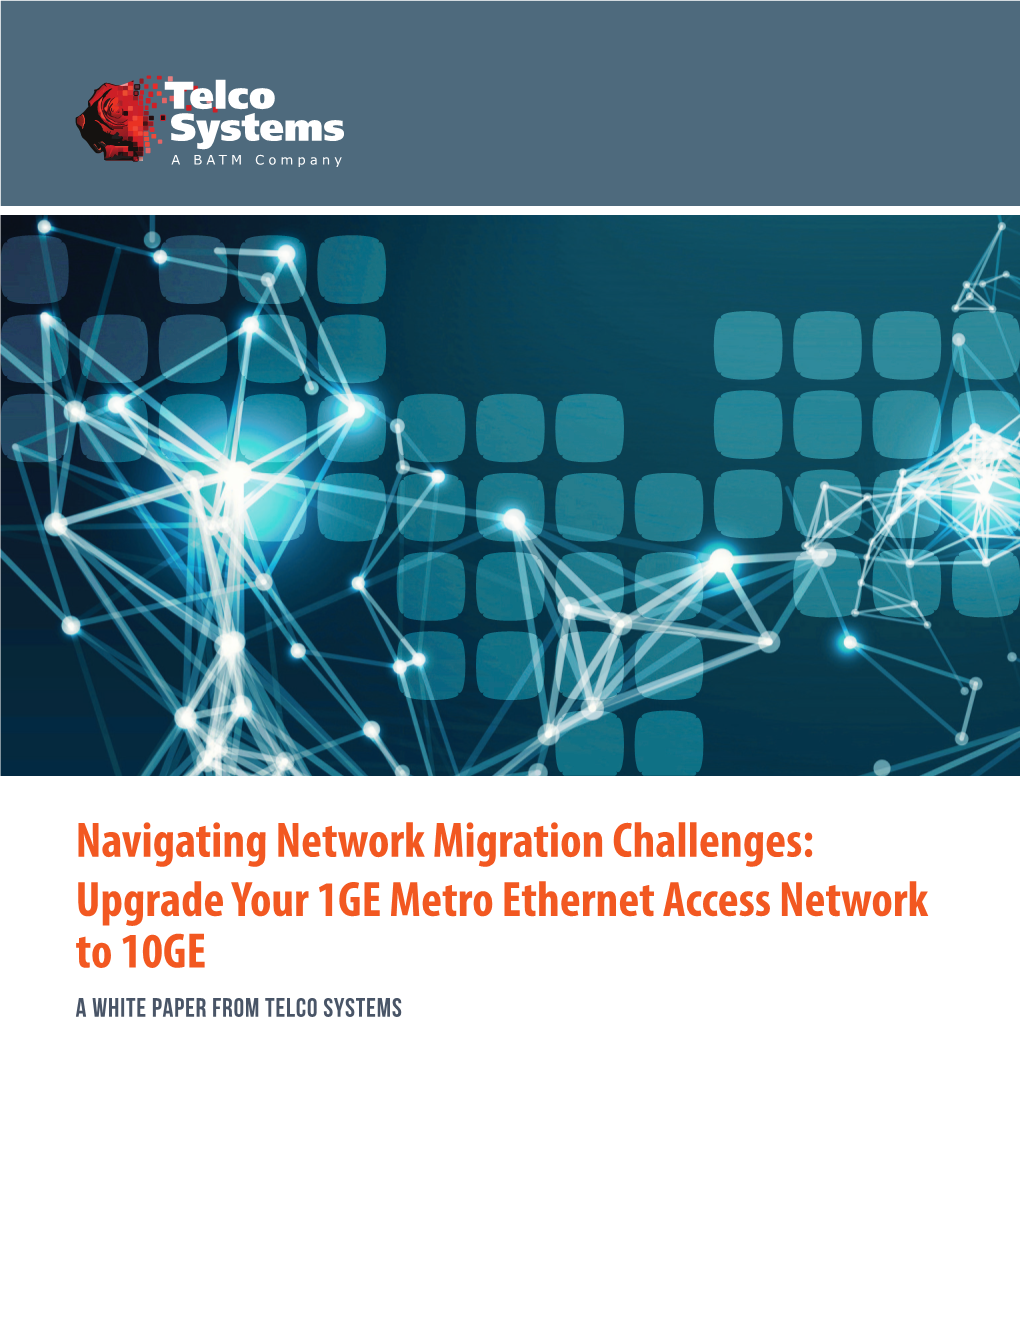 Navigating Network Migration Challenges: Upgrade Your 1GE